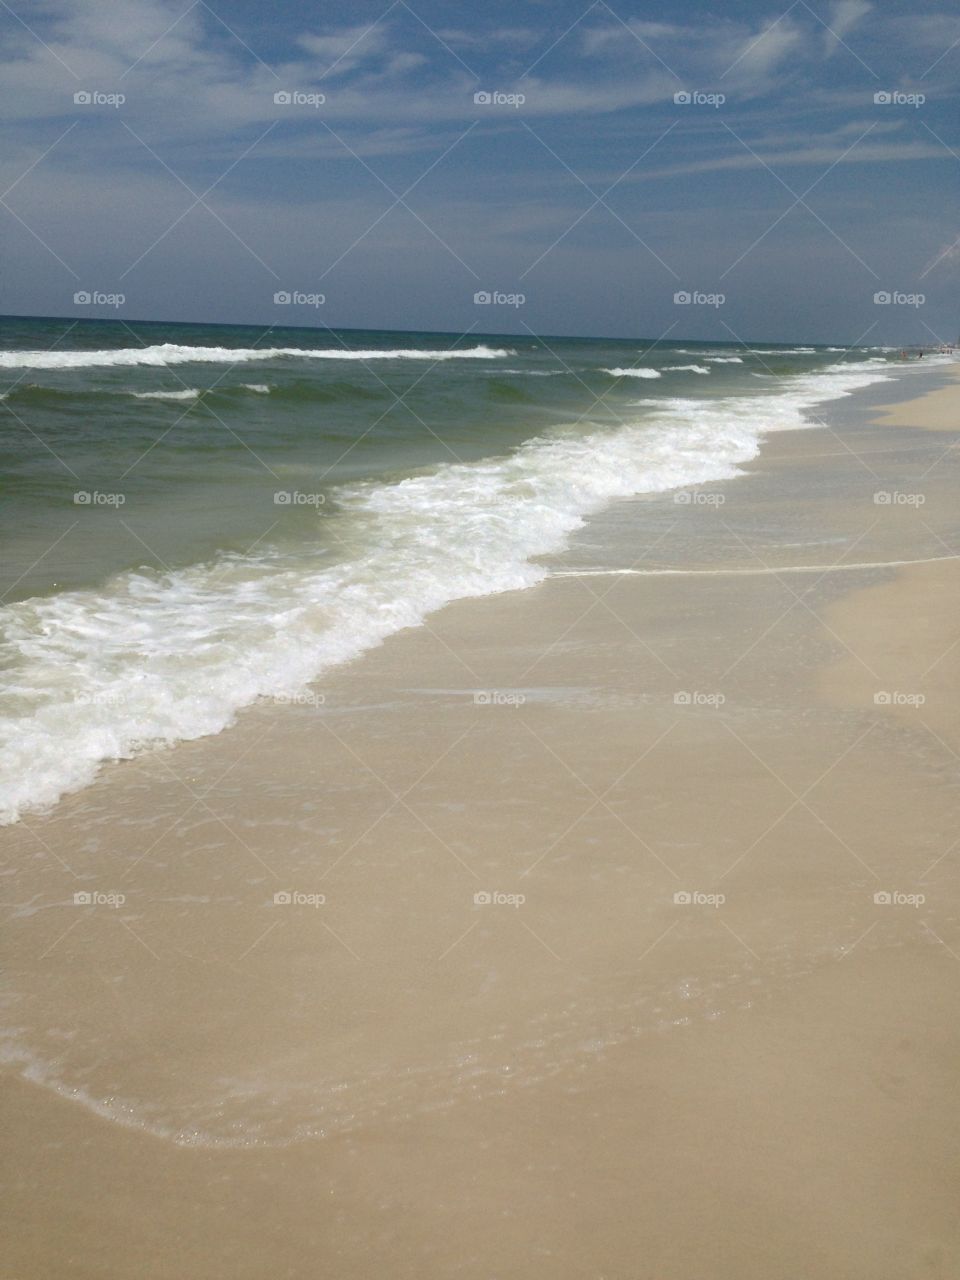 Side Waves
Panama City Beach, Florida